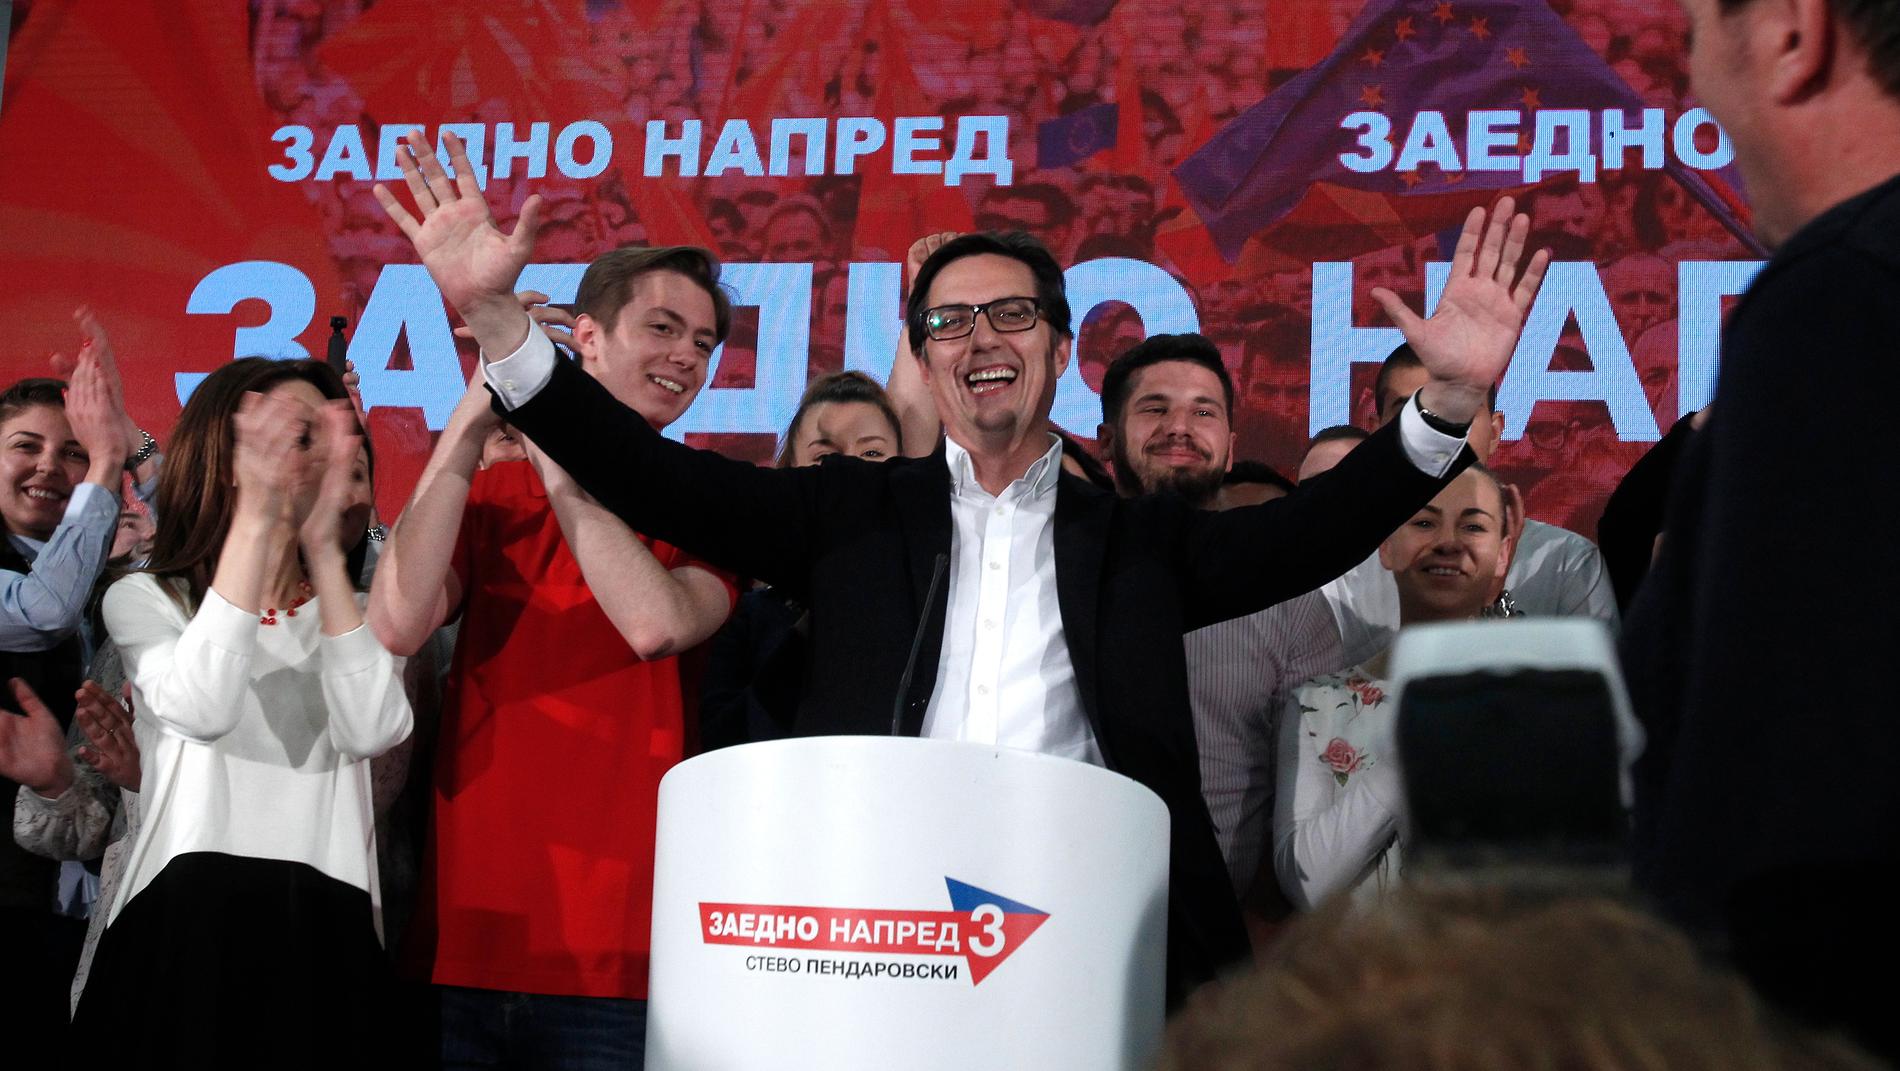 Stevo Pendarovski utropar seger i presidentvalet i Nordmakedonien.